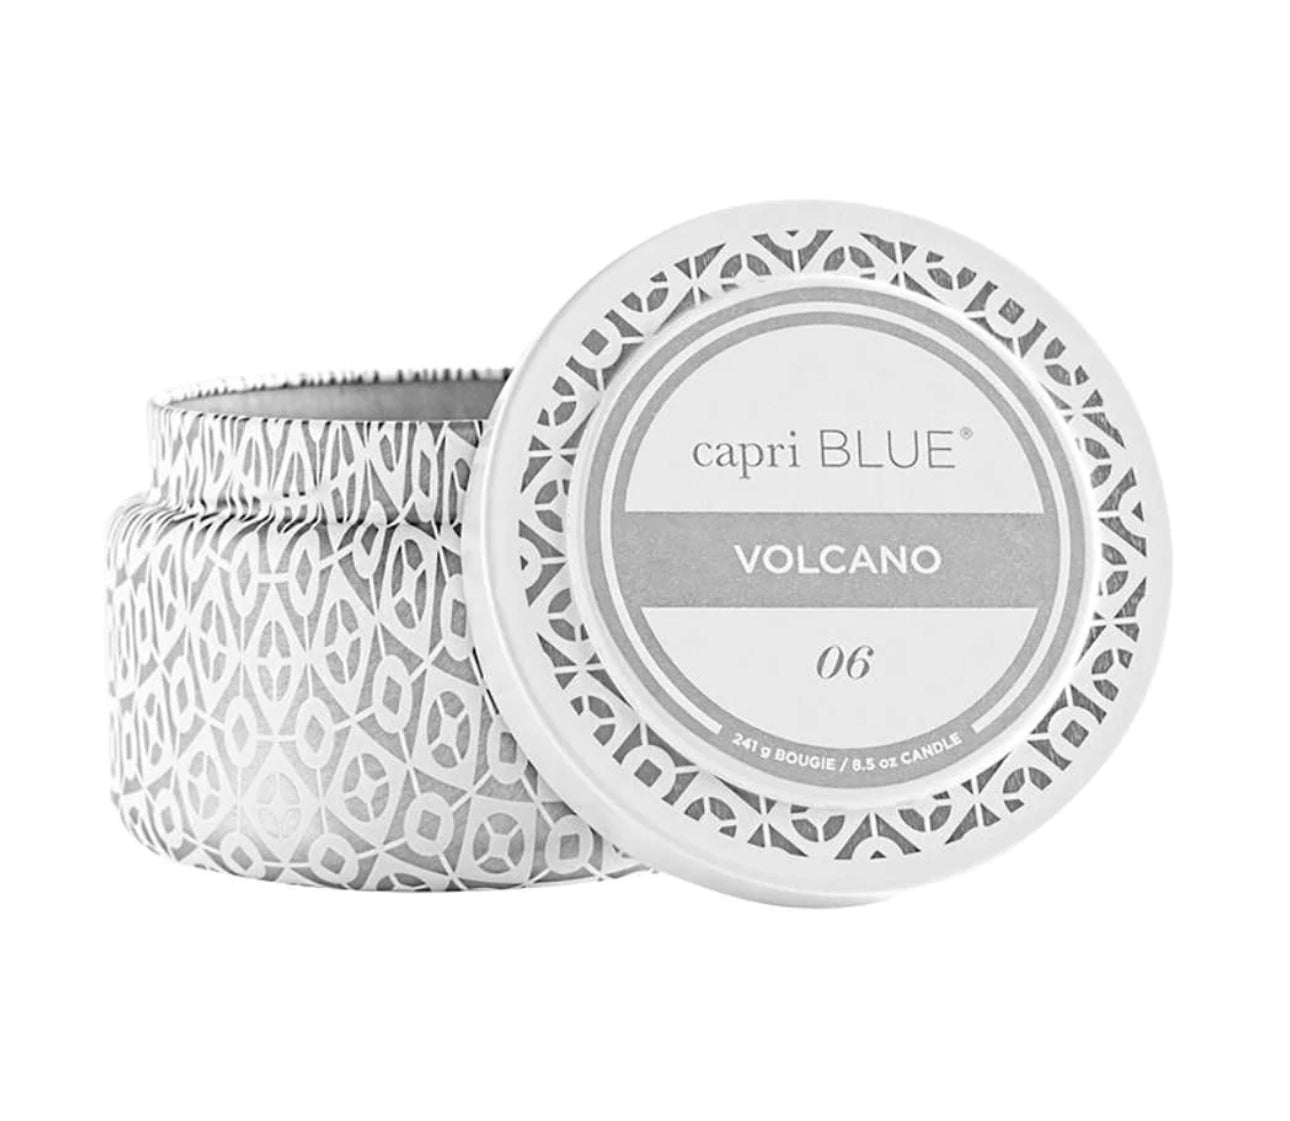 CapriBlue Volcano Candle Travel Tin